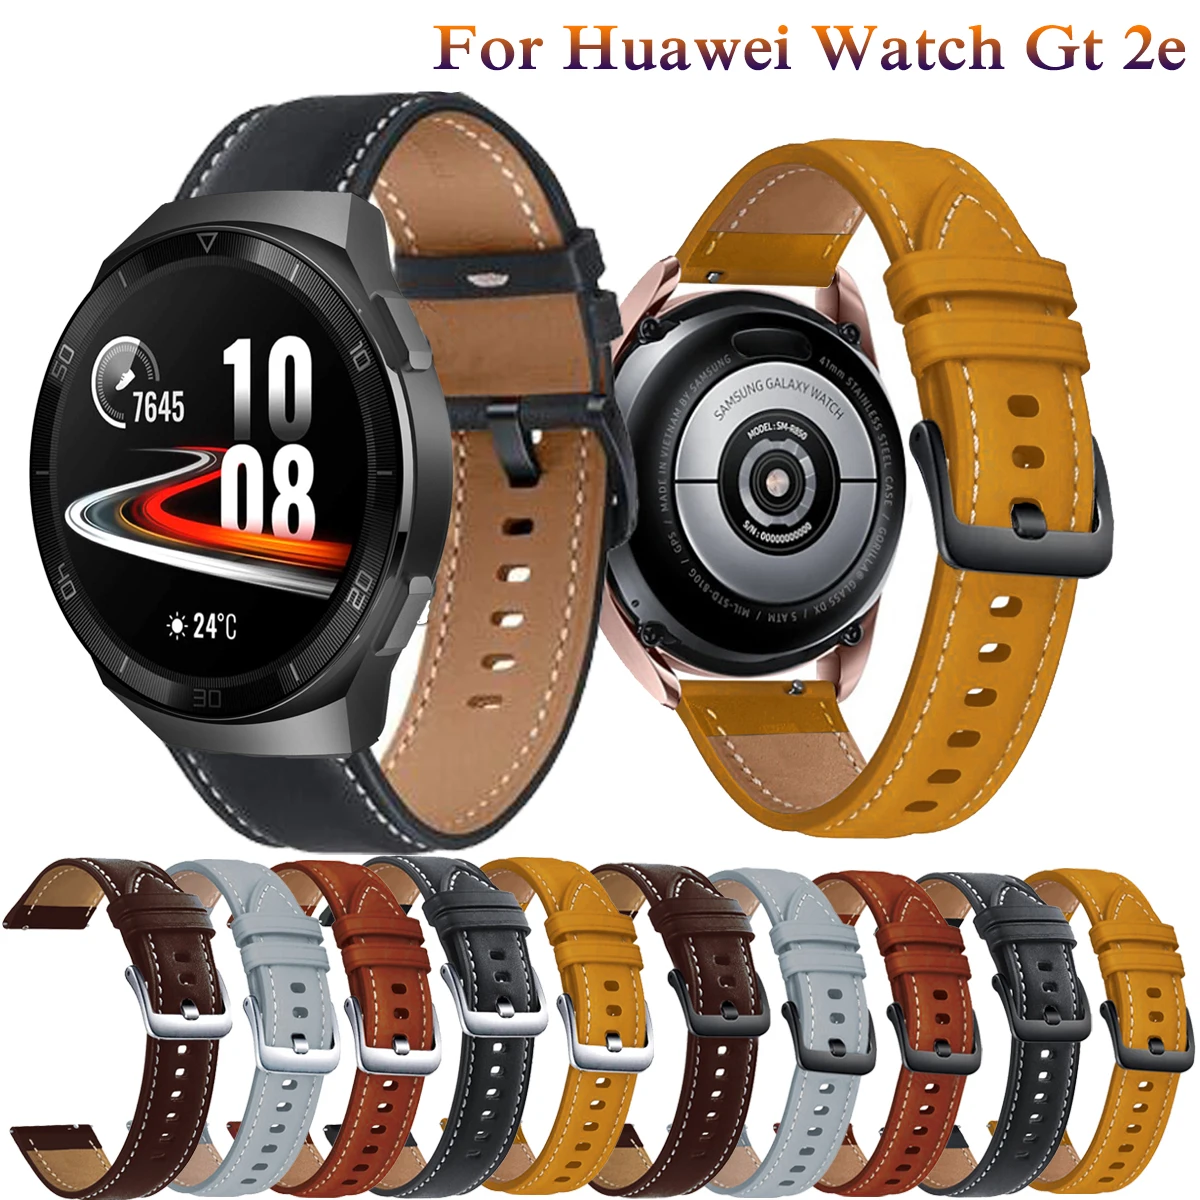 Nuovo per Huawei Watch GT 2 / Pro / 2E / GT 46mm cinturino cinturino in vera pelle 22mm cinturino orologio GT2 gt2e cinturino cinturino